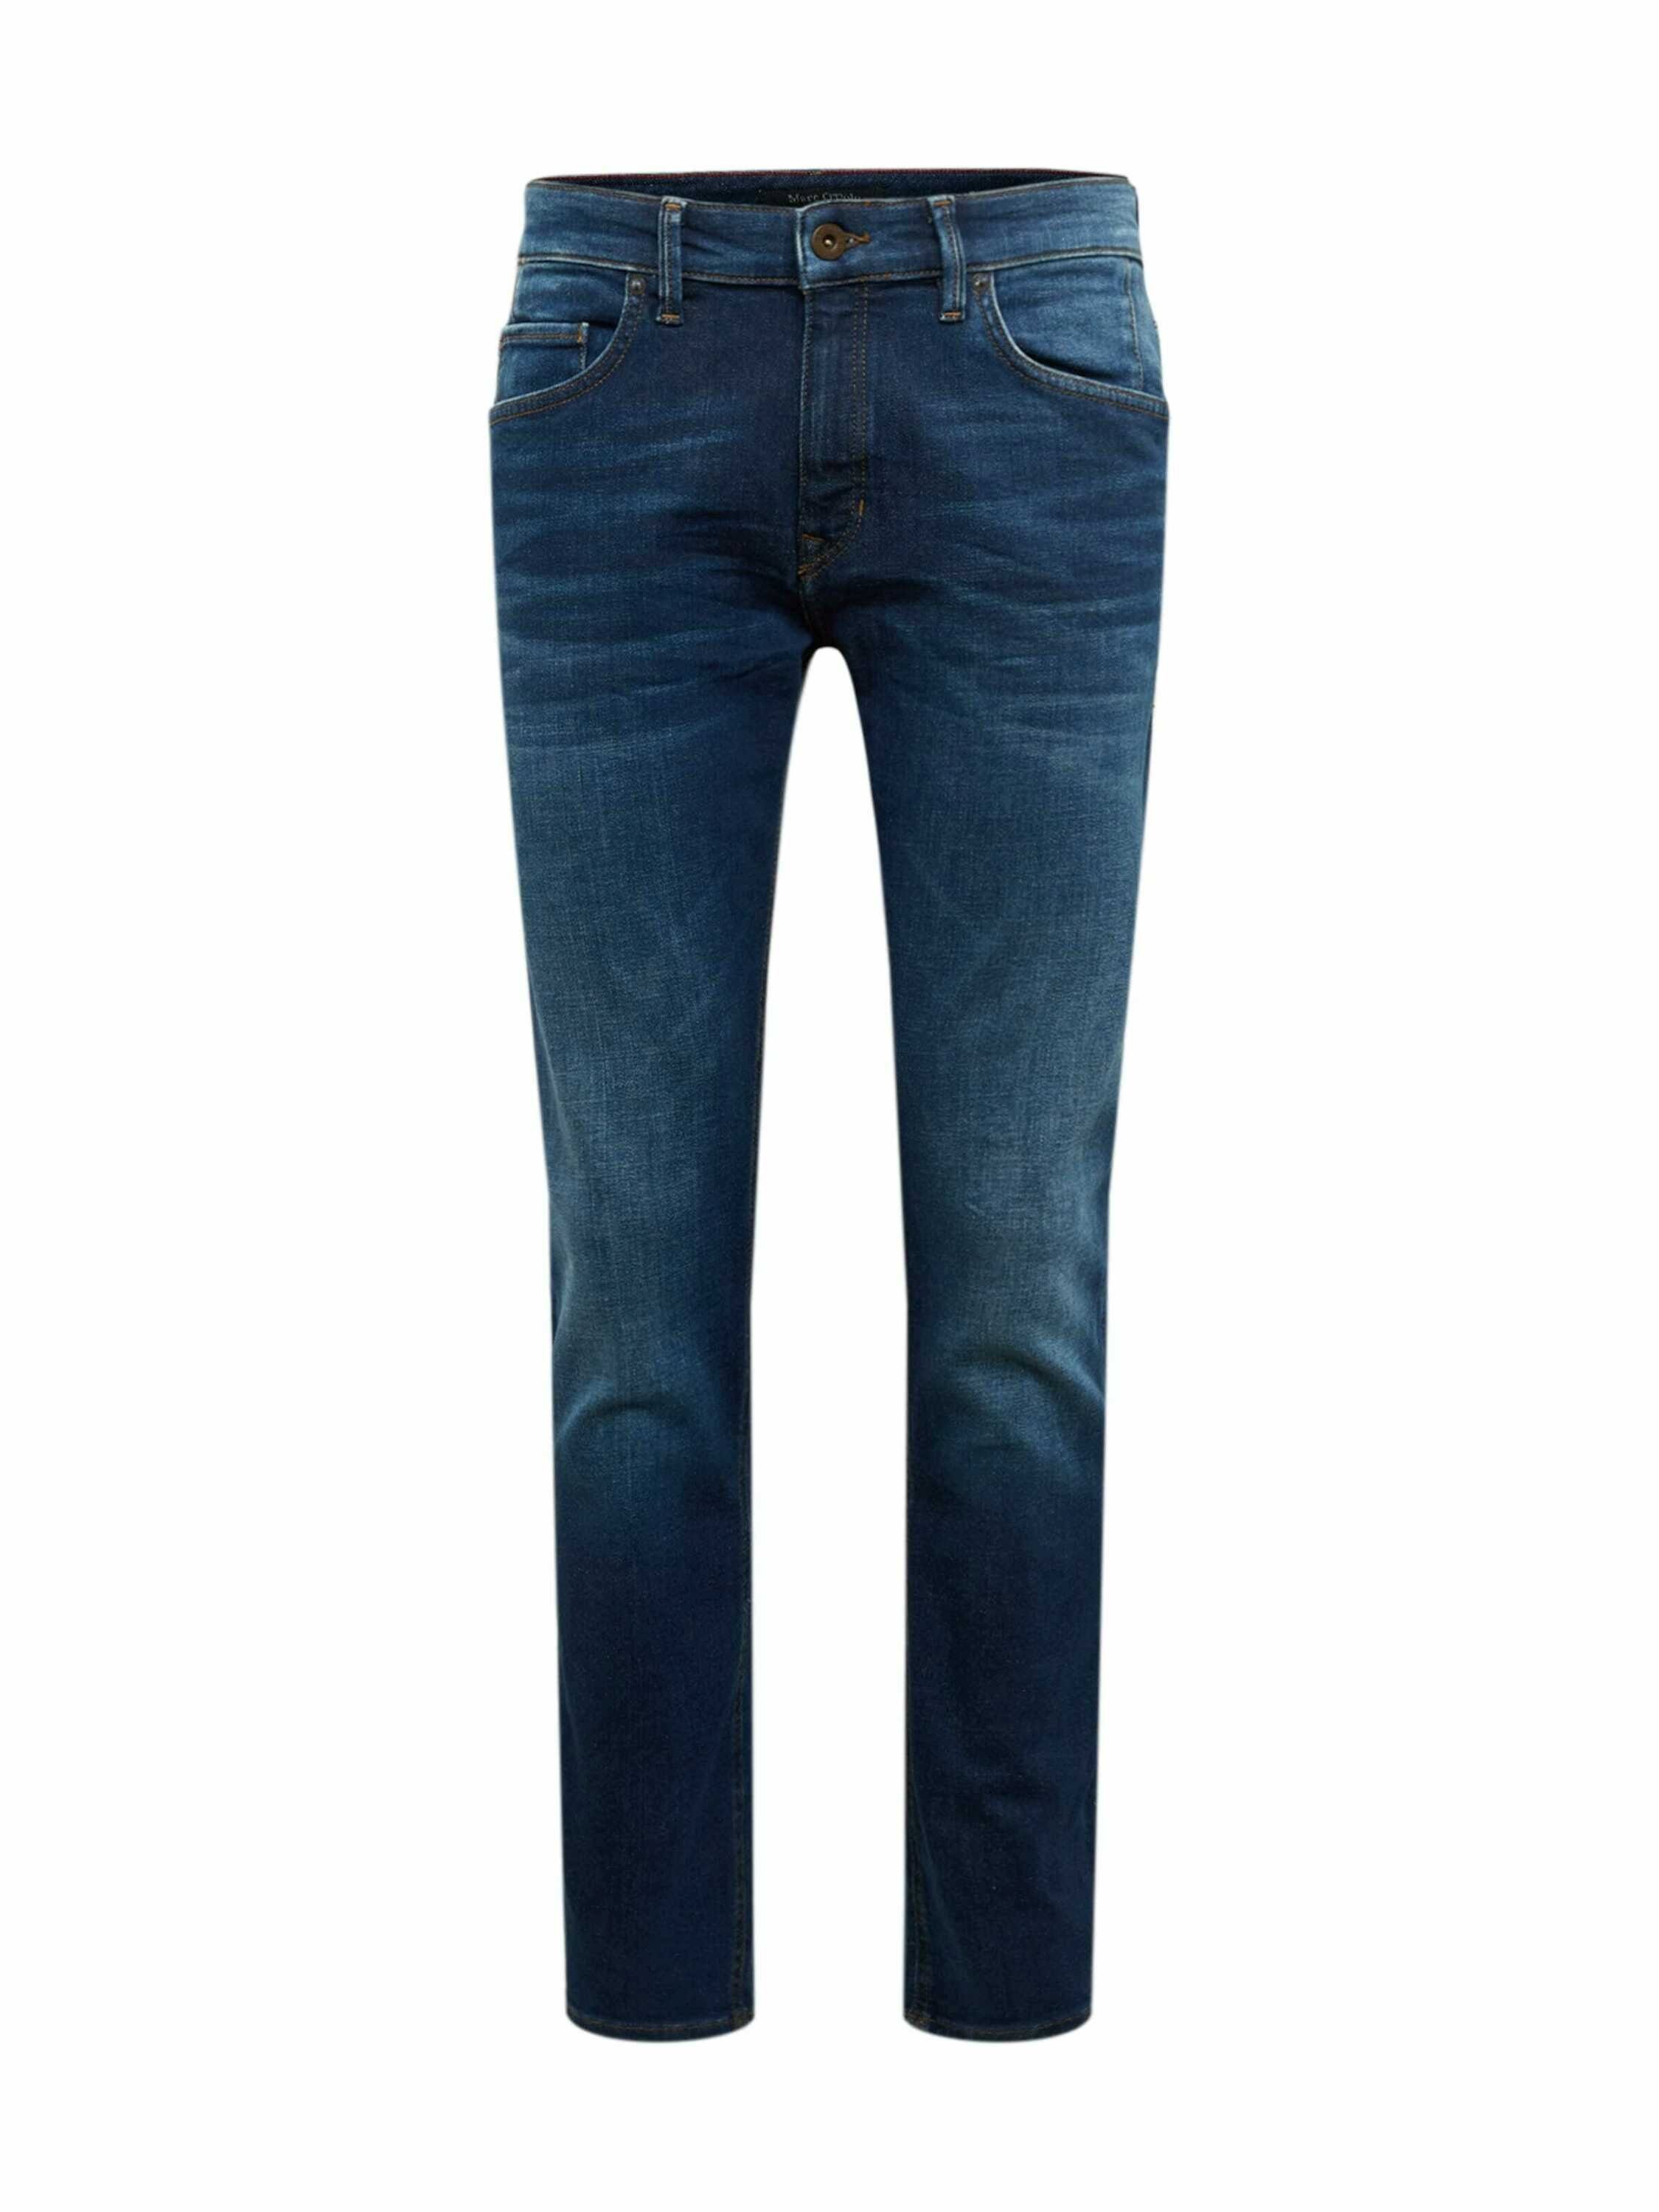 Marc O'Polo Herren Slim-Fit Jeans online kaufen | OTTO